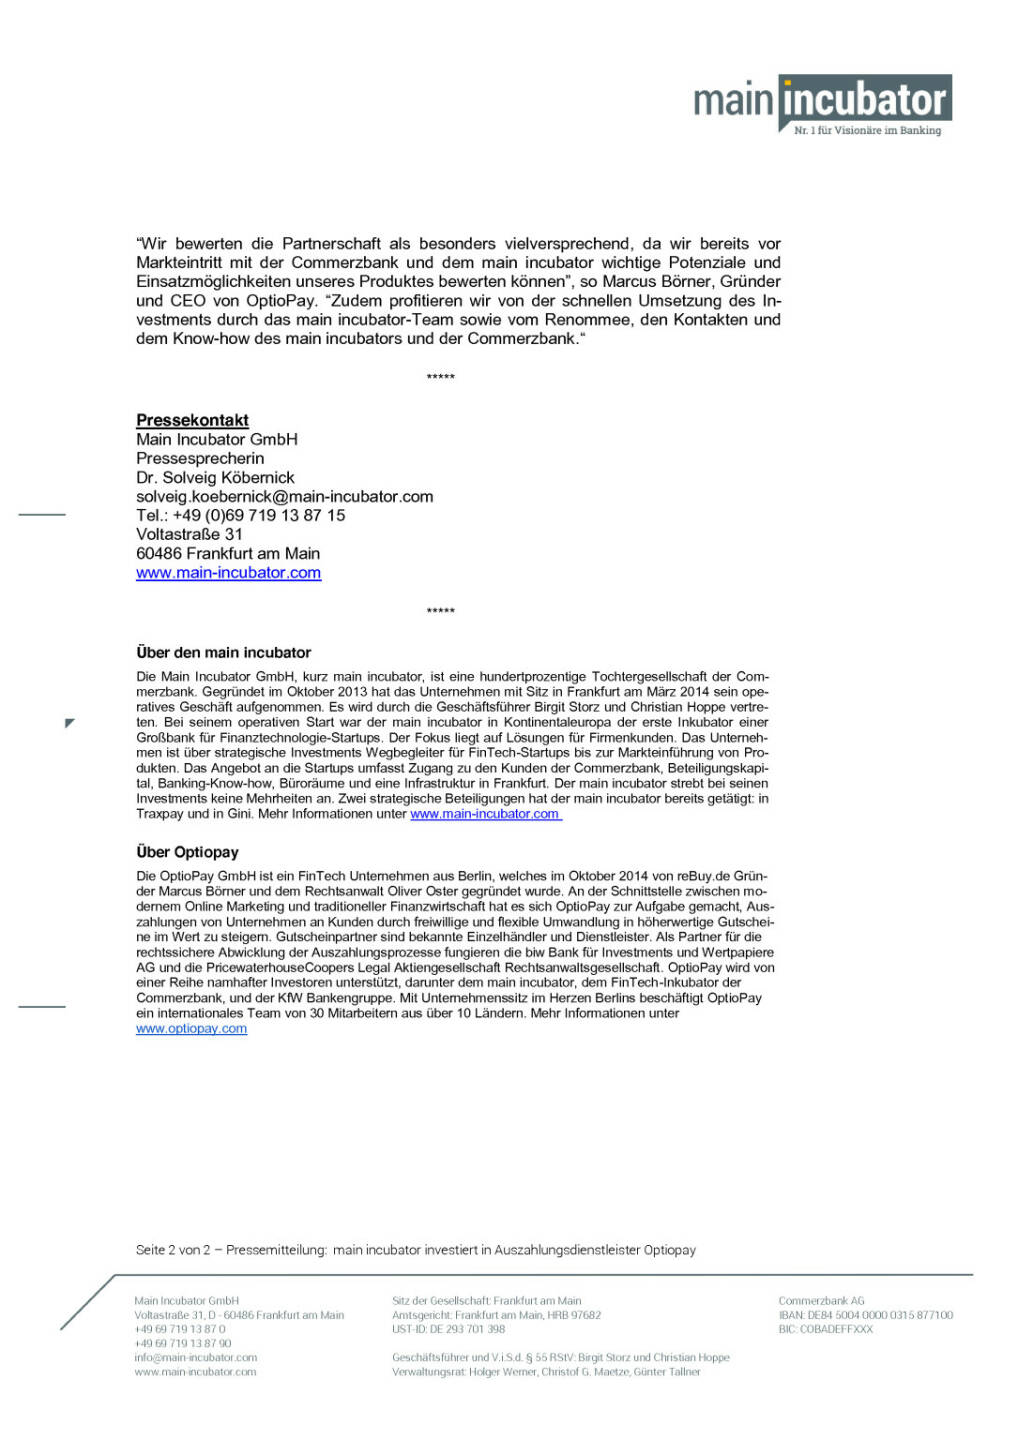 Commerzbank-Tochter investiert in OptioPay, Seite 2/2, komplettes Dokument unter http://boerse-social.com/static/uploads/file_303_commerzbank-tochter_investiert_in_optiopay.pdf